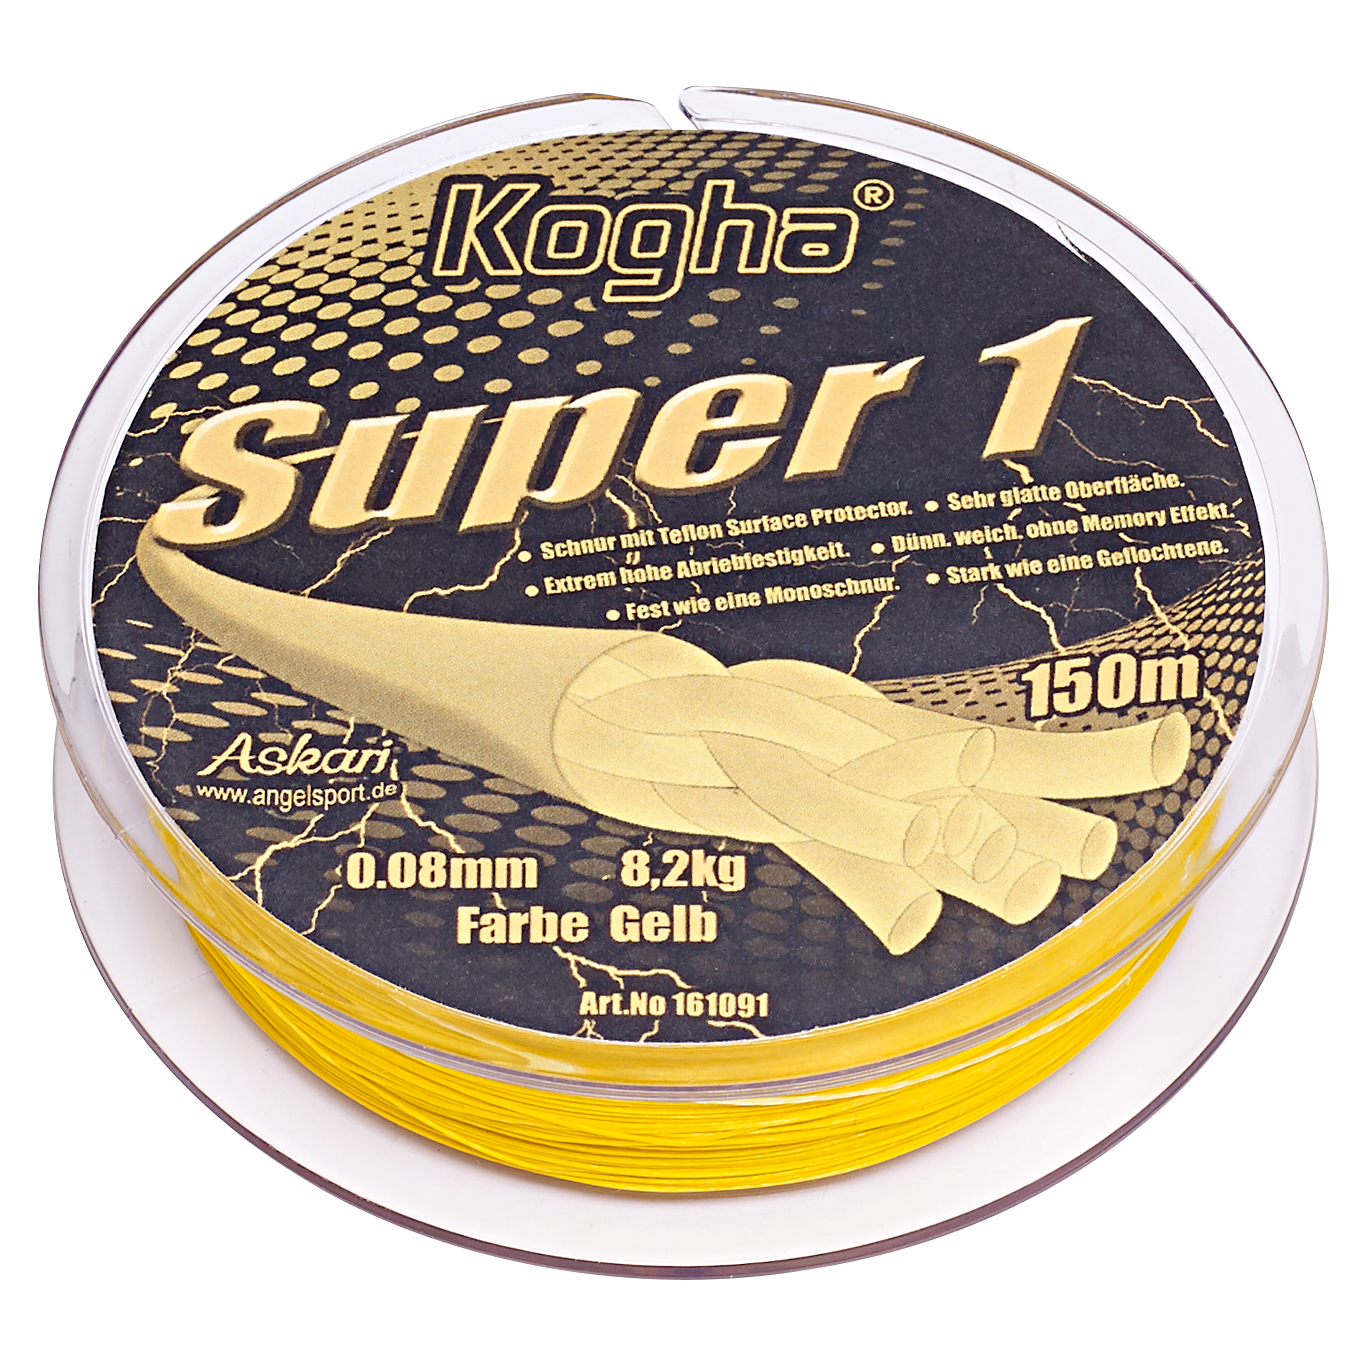 Kogha Angelschnur Super 1 (gelb, 150 m) günstig kaufen - Askari Angelshop